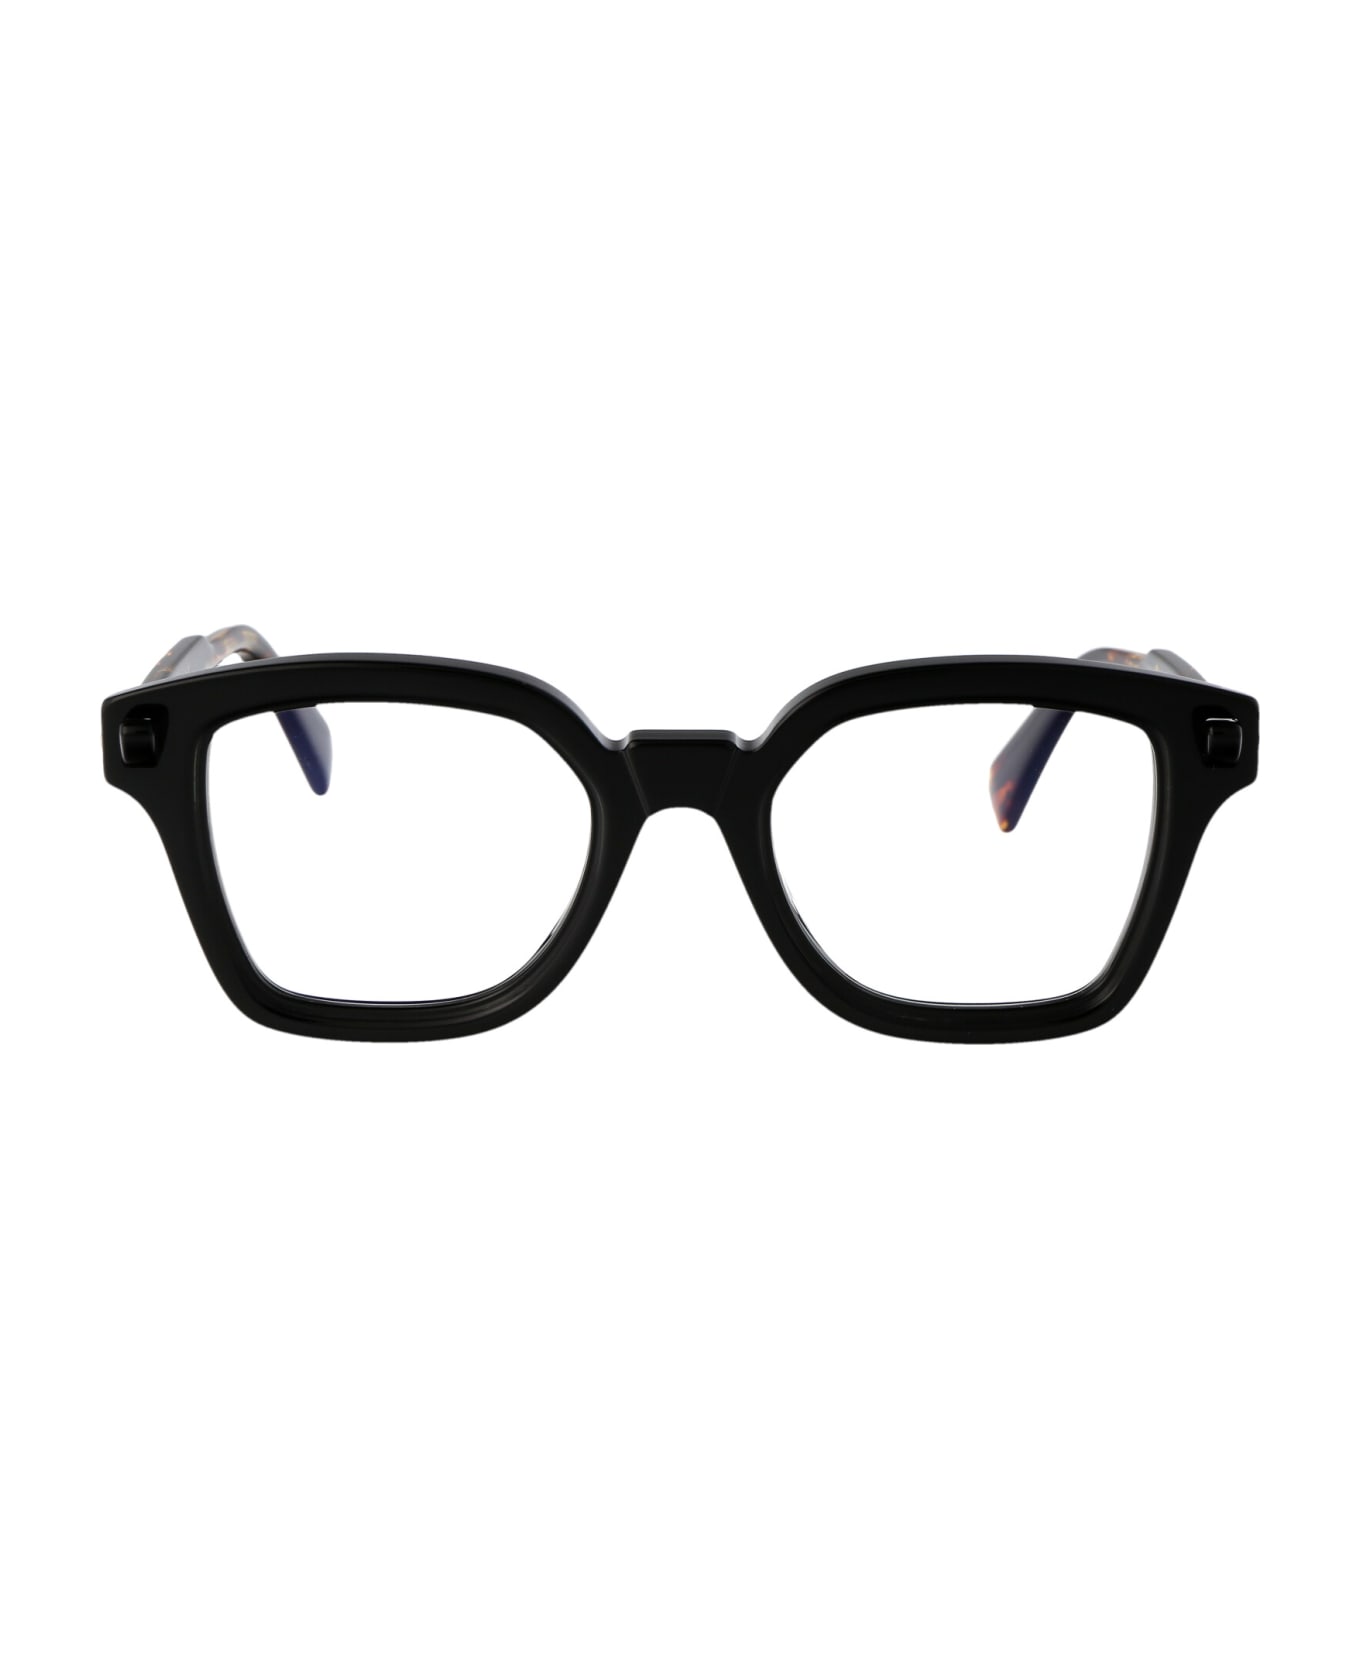 Kuboraum Maske Q3 Glasses - BST BLACK アイウェア